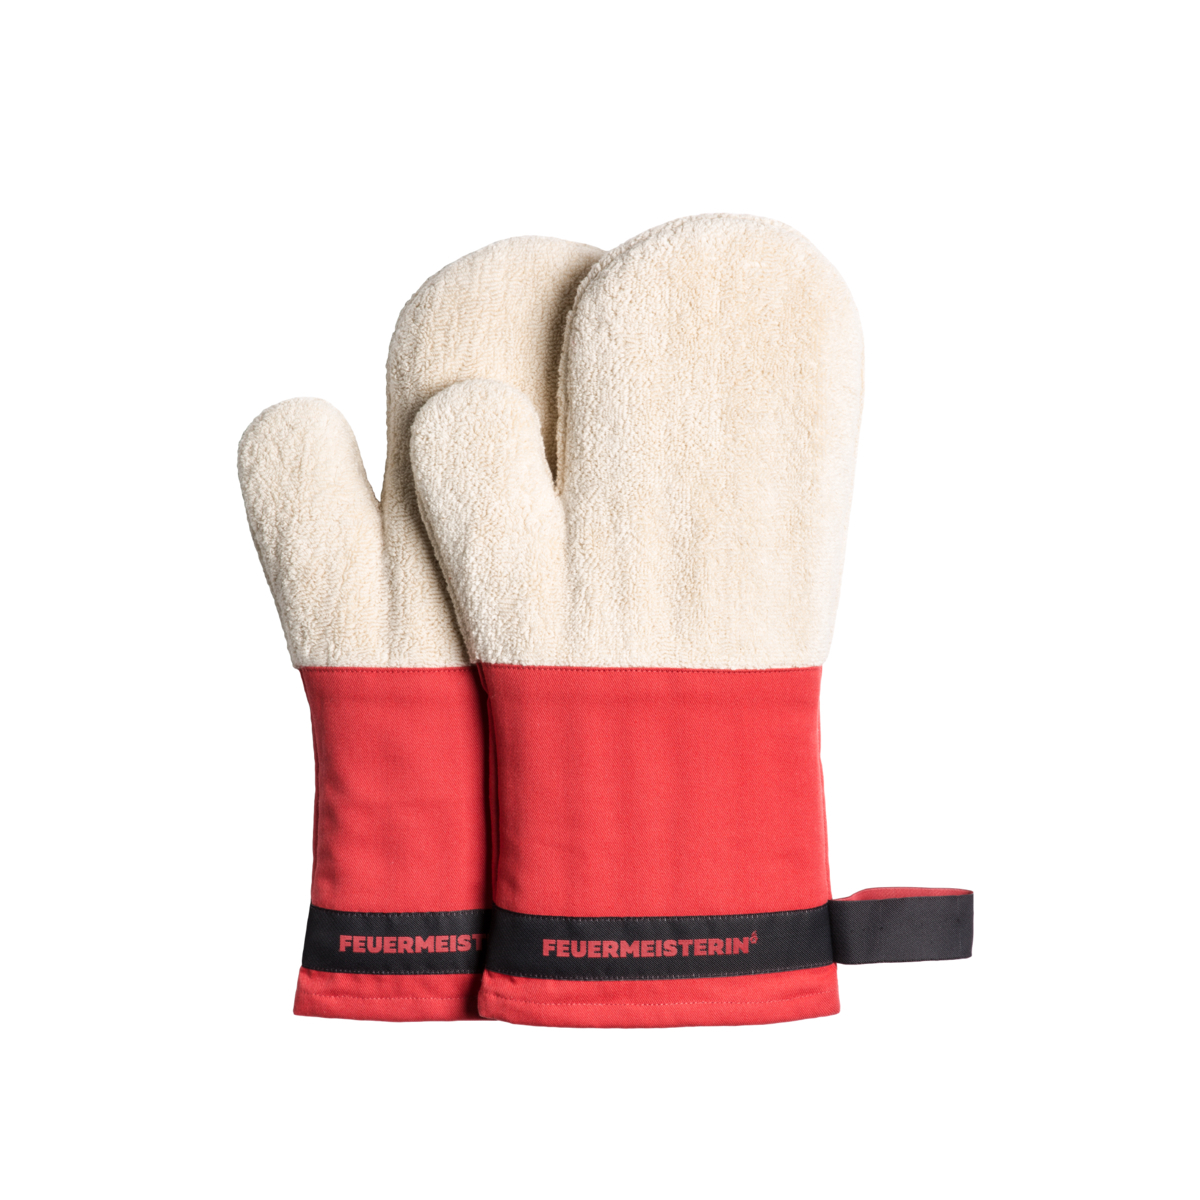 Kuchyňské rukavice Feuermeister Premium - bílé-červené, 8